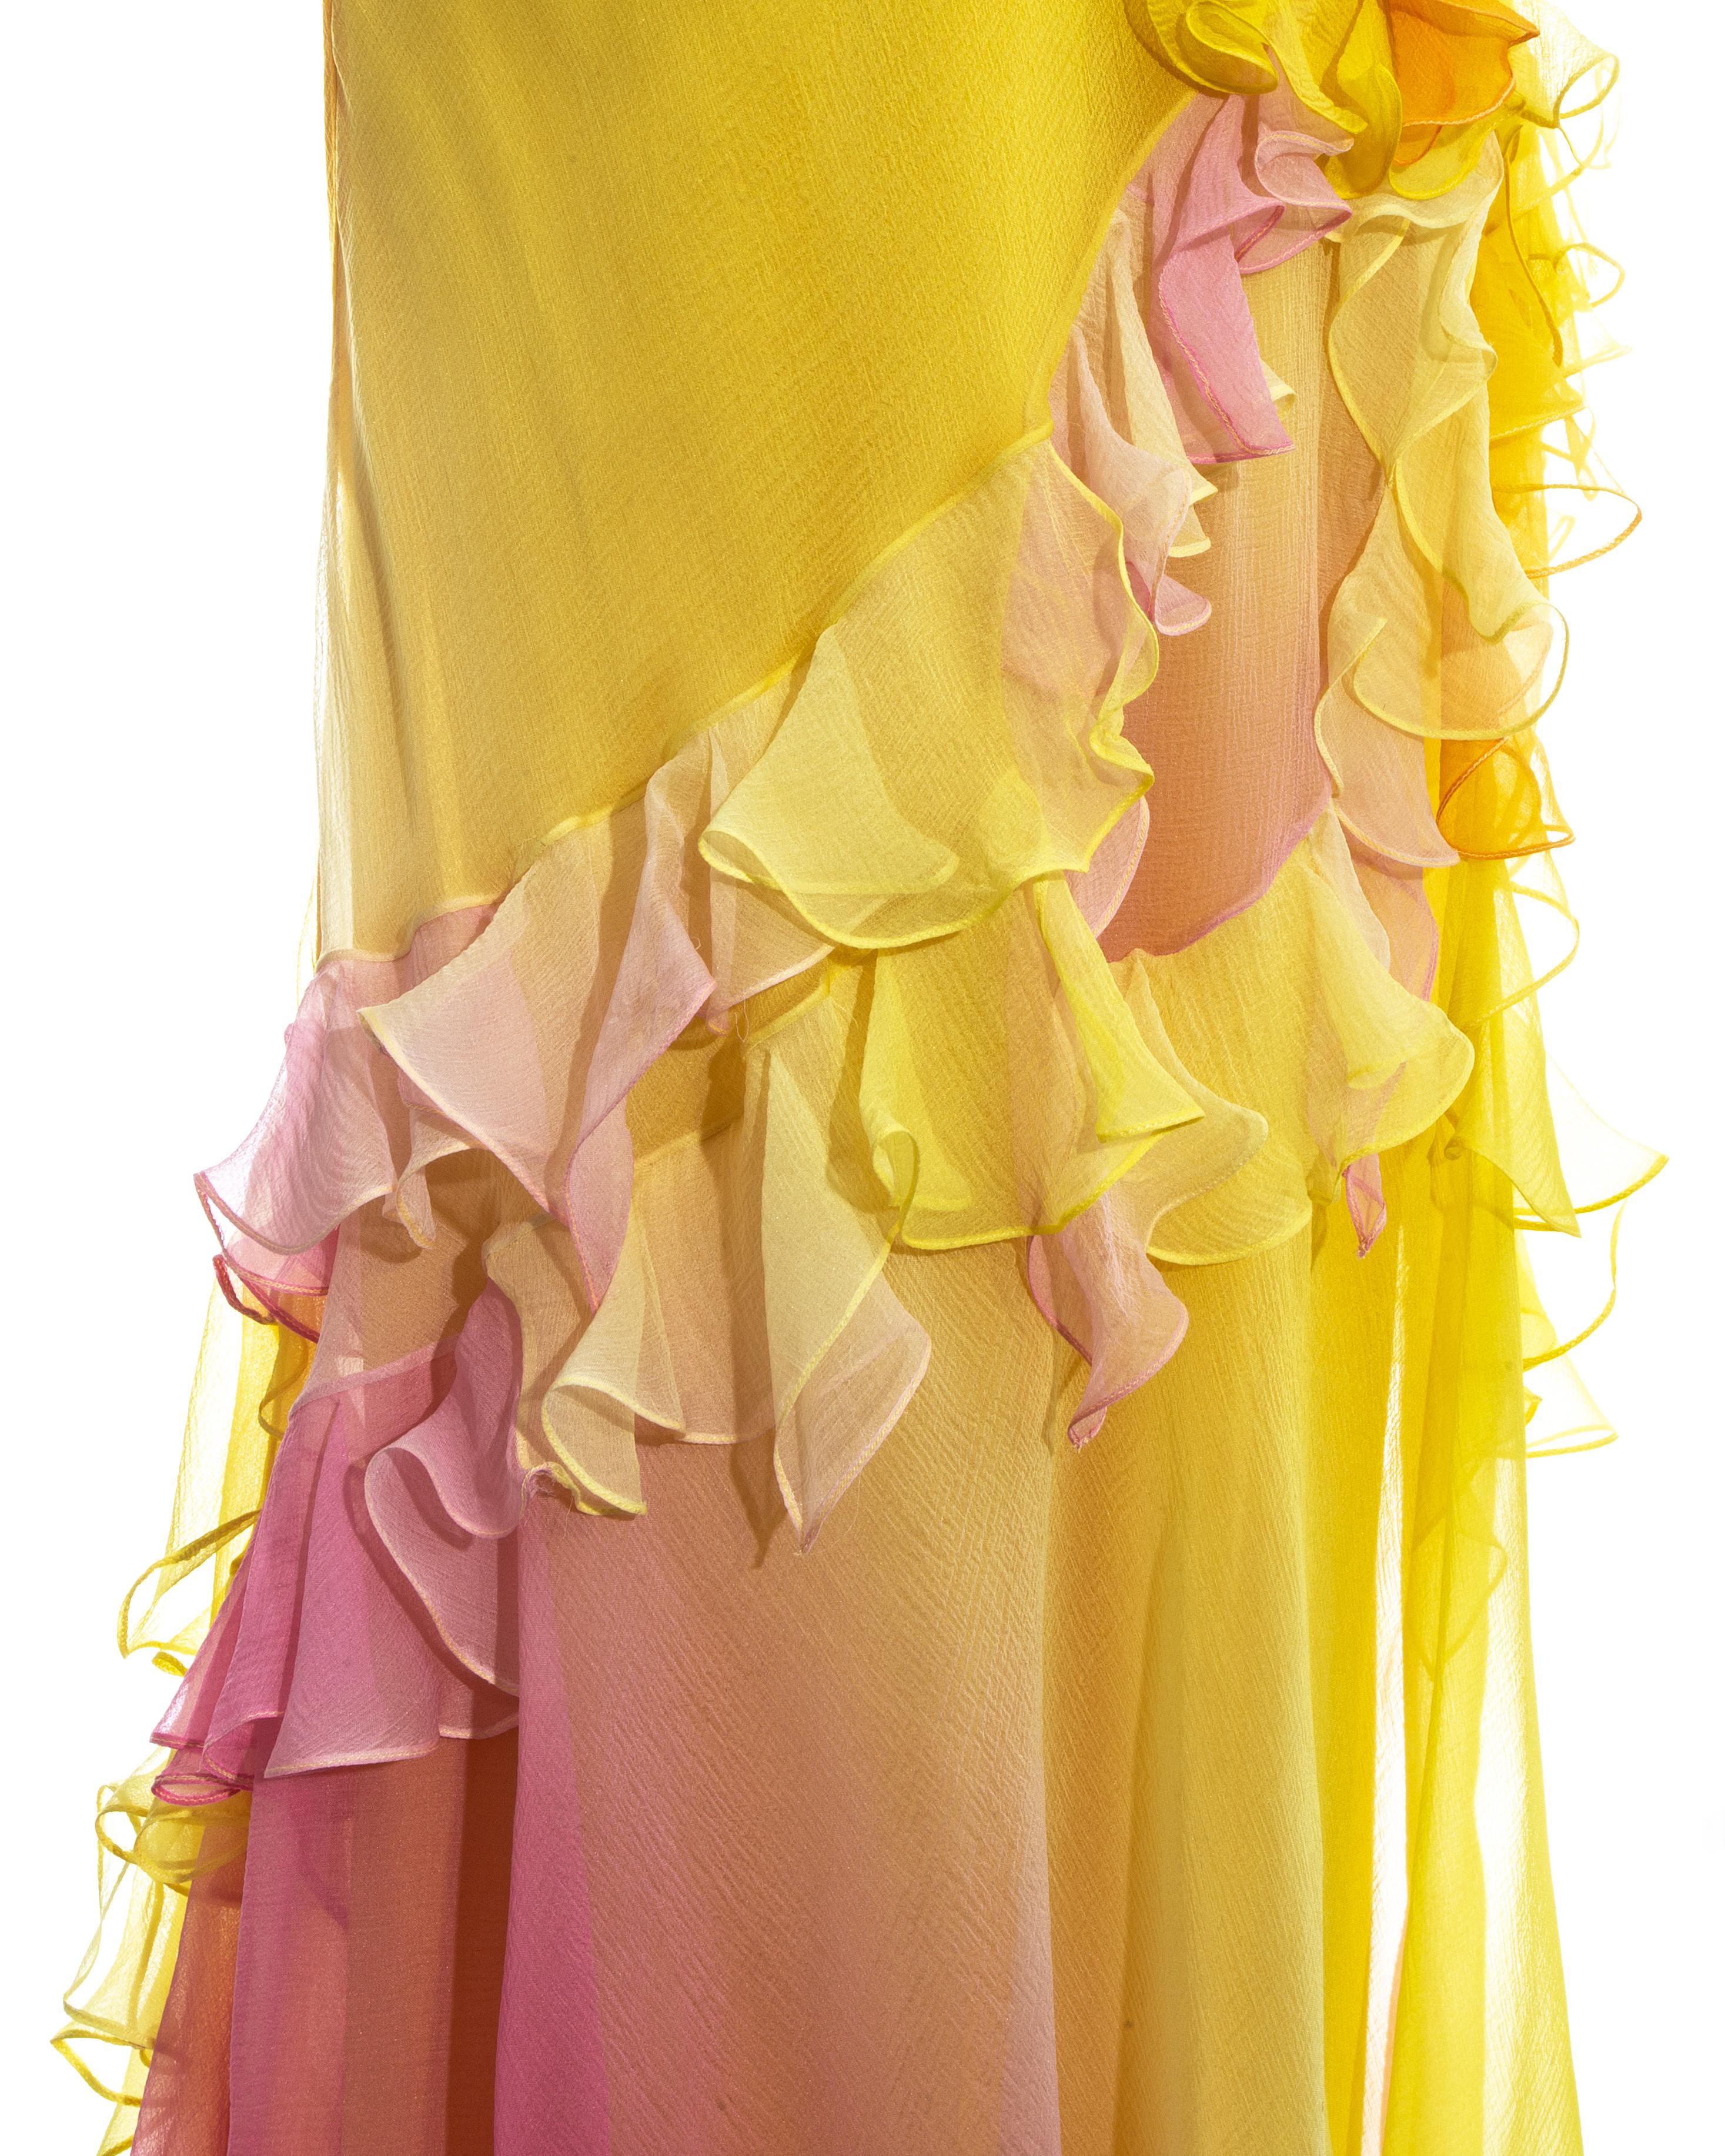 Orange John Galliano silk chiffon ruffled evening dress, ss 2005